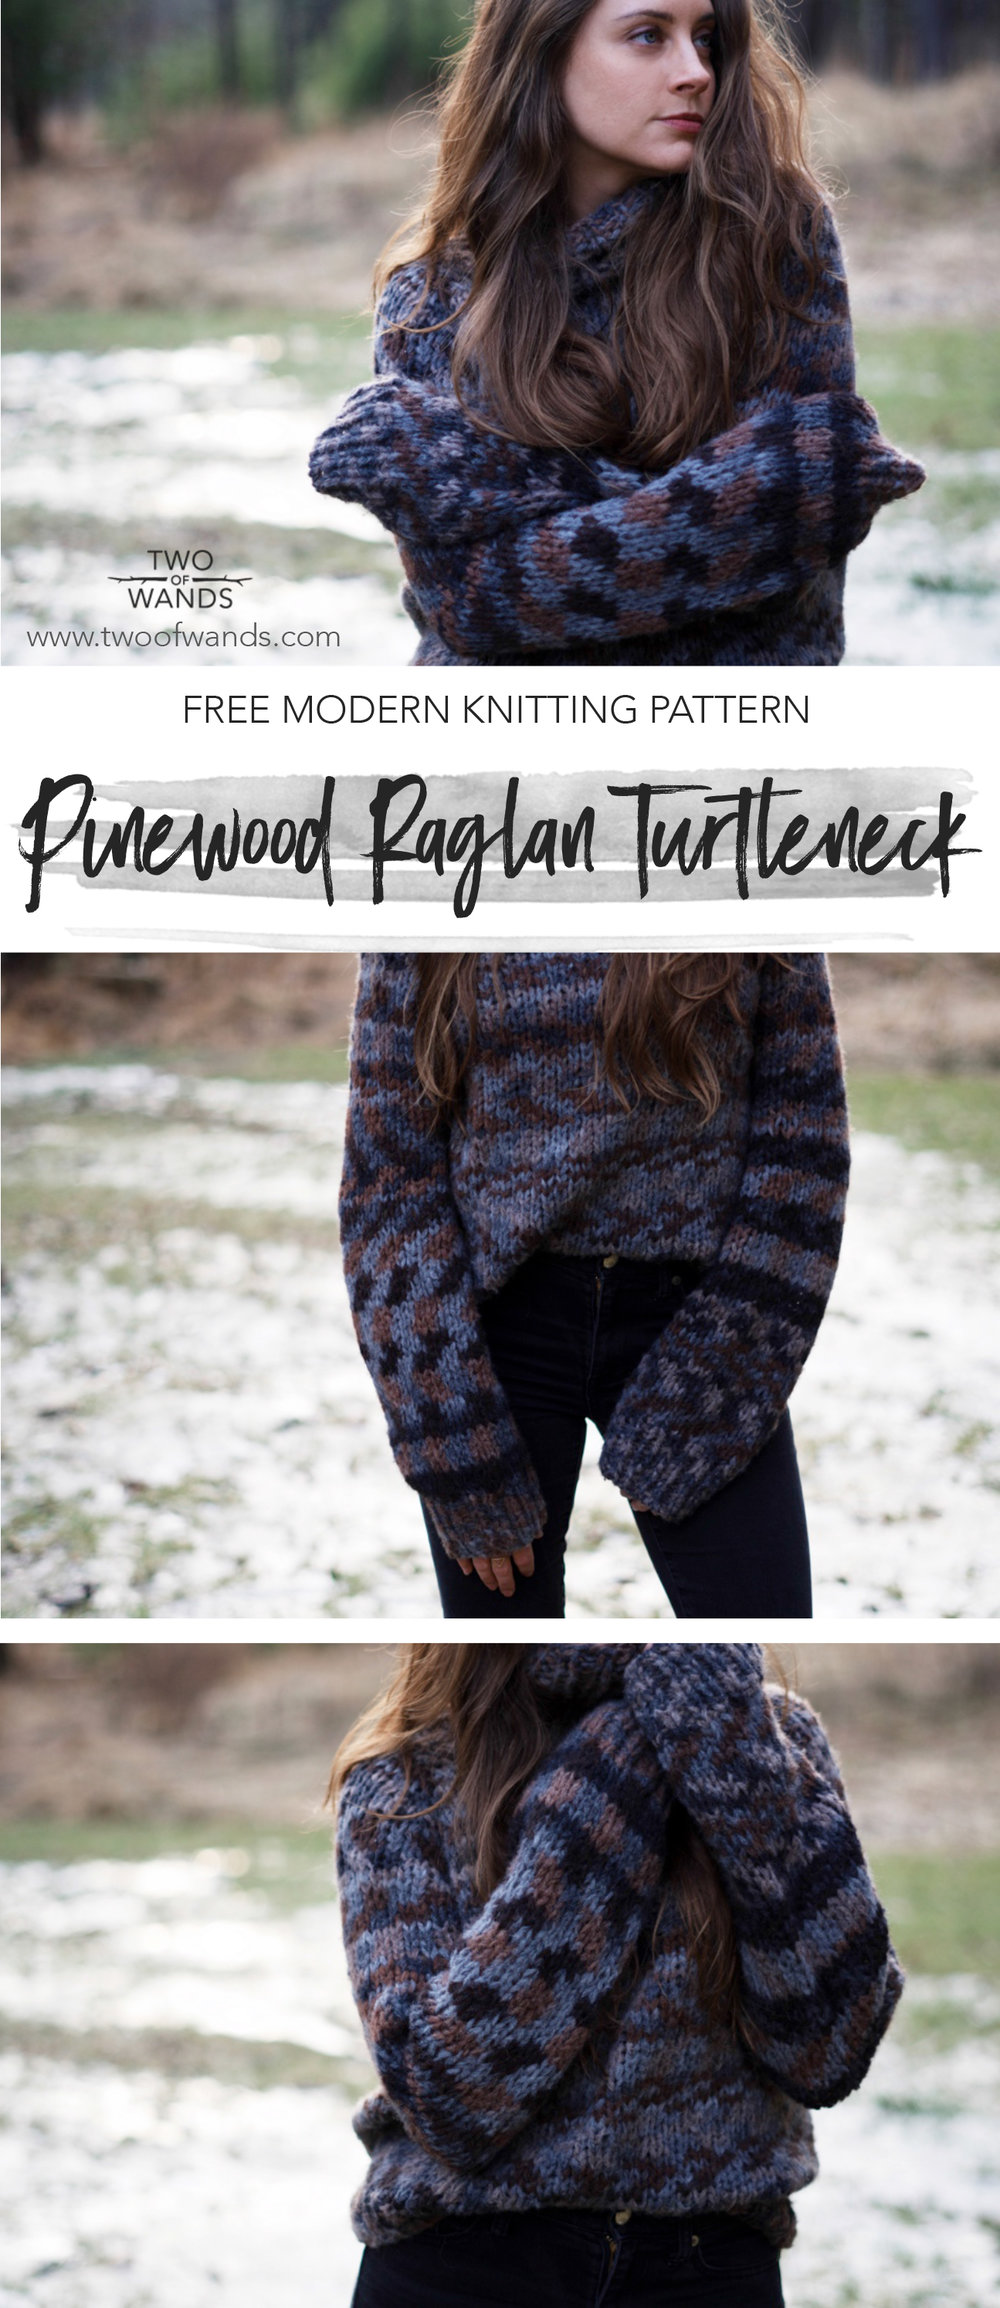 Pinewood Raglan Turtleneck pattern by Two of Wands